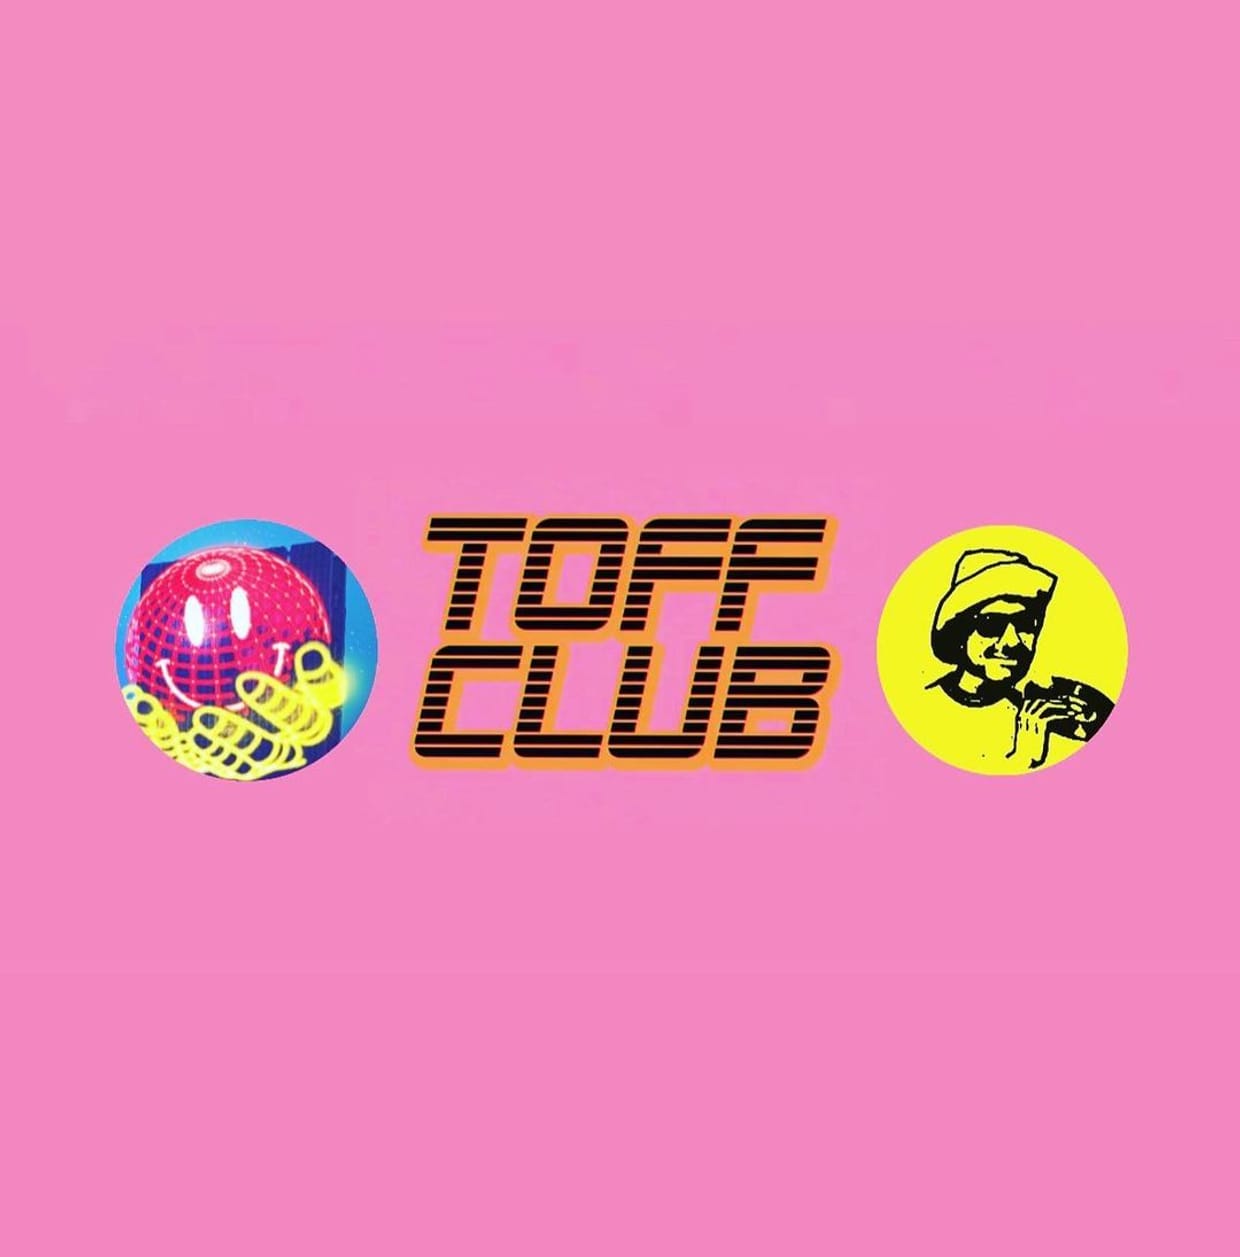 TOFF CLUB WITH DAN WATT